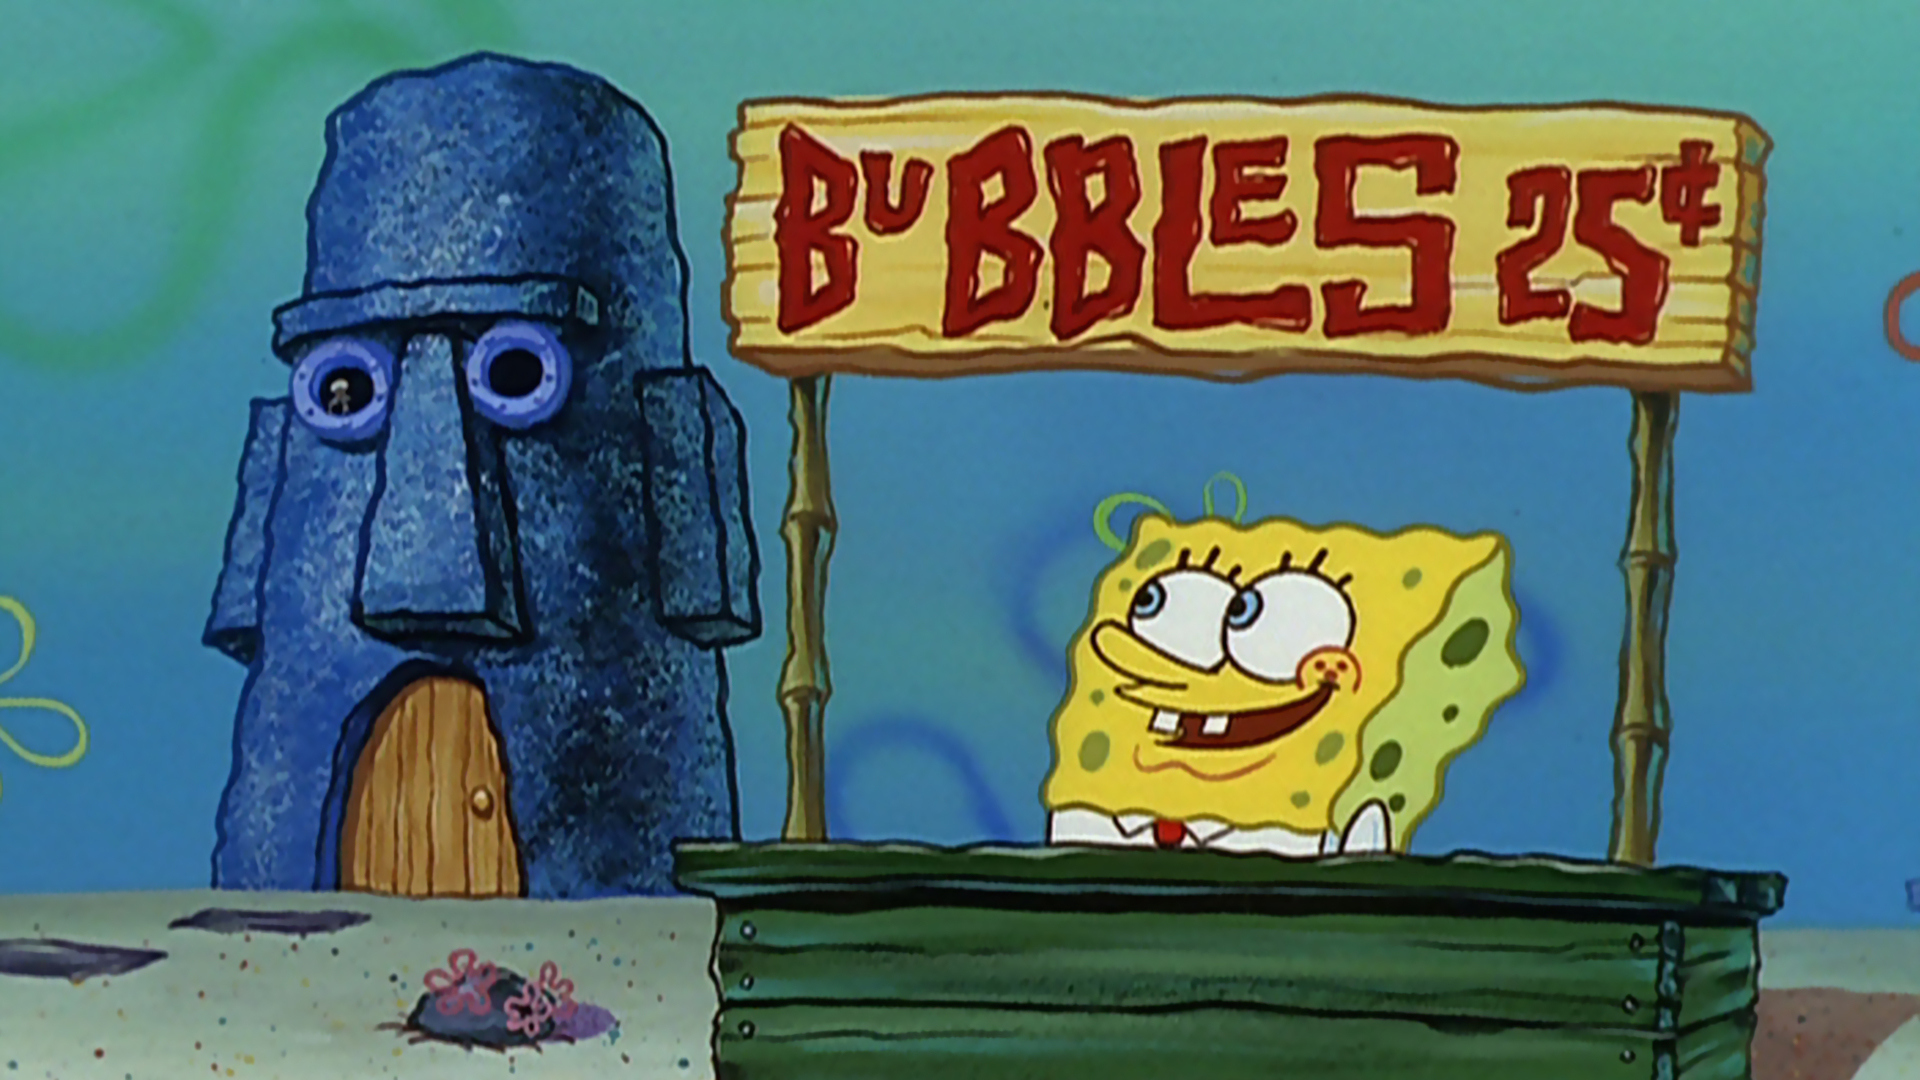 spongebob squarepants full episodes free 123